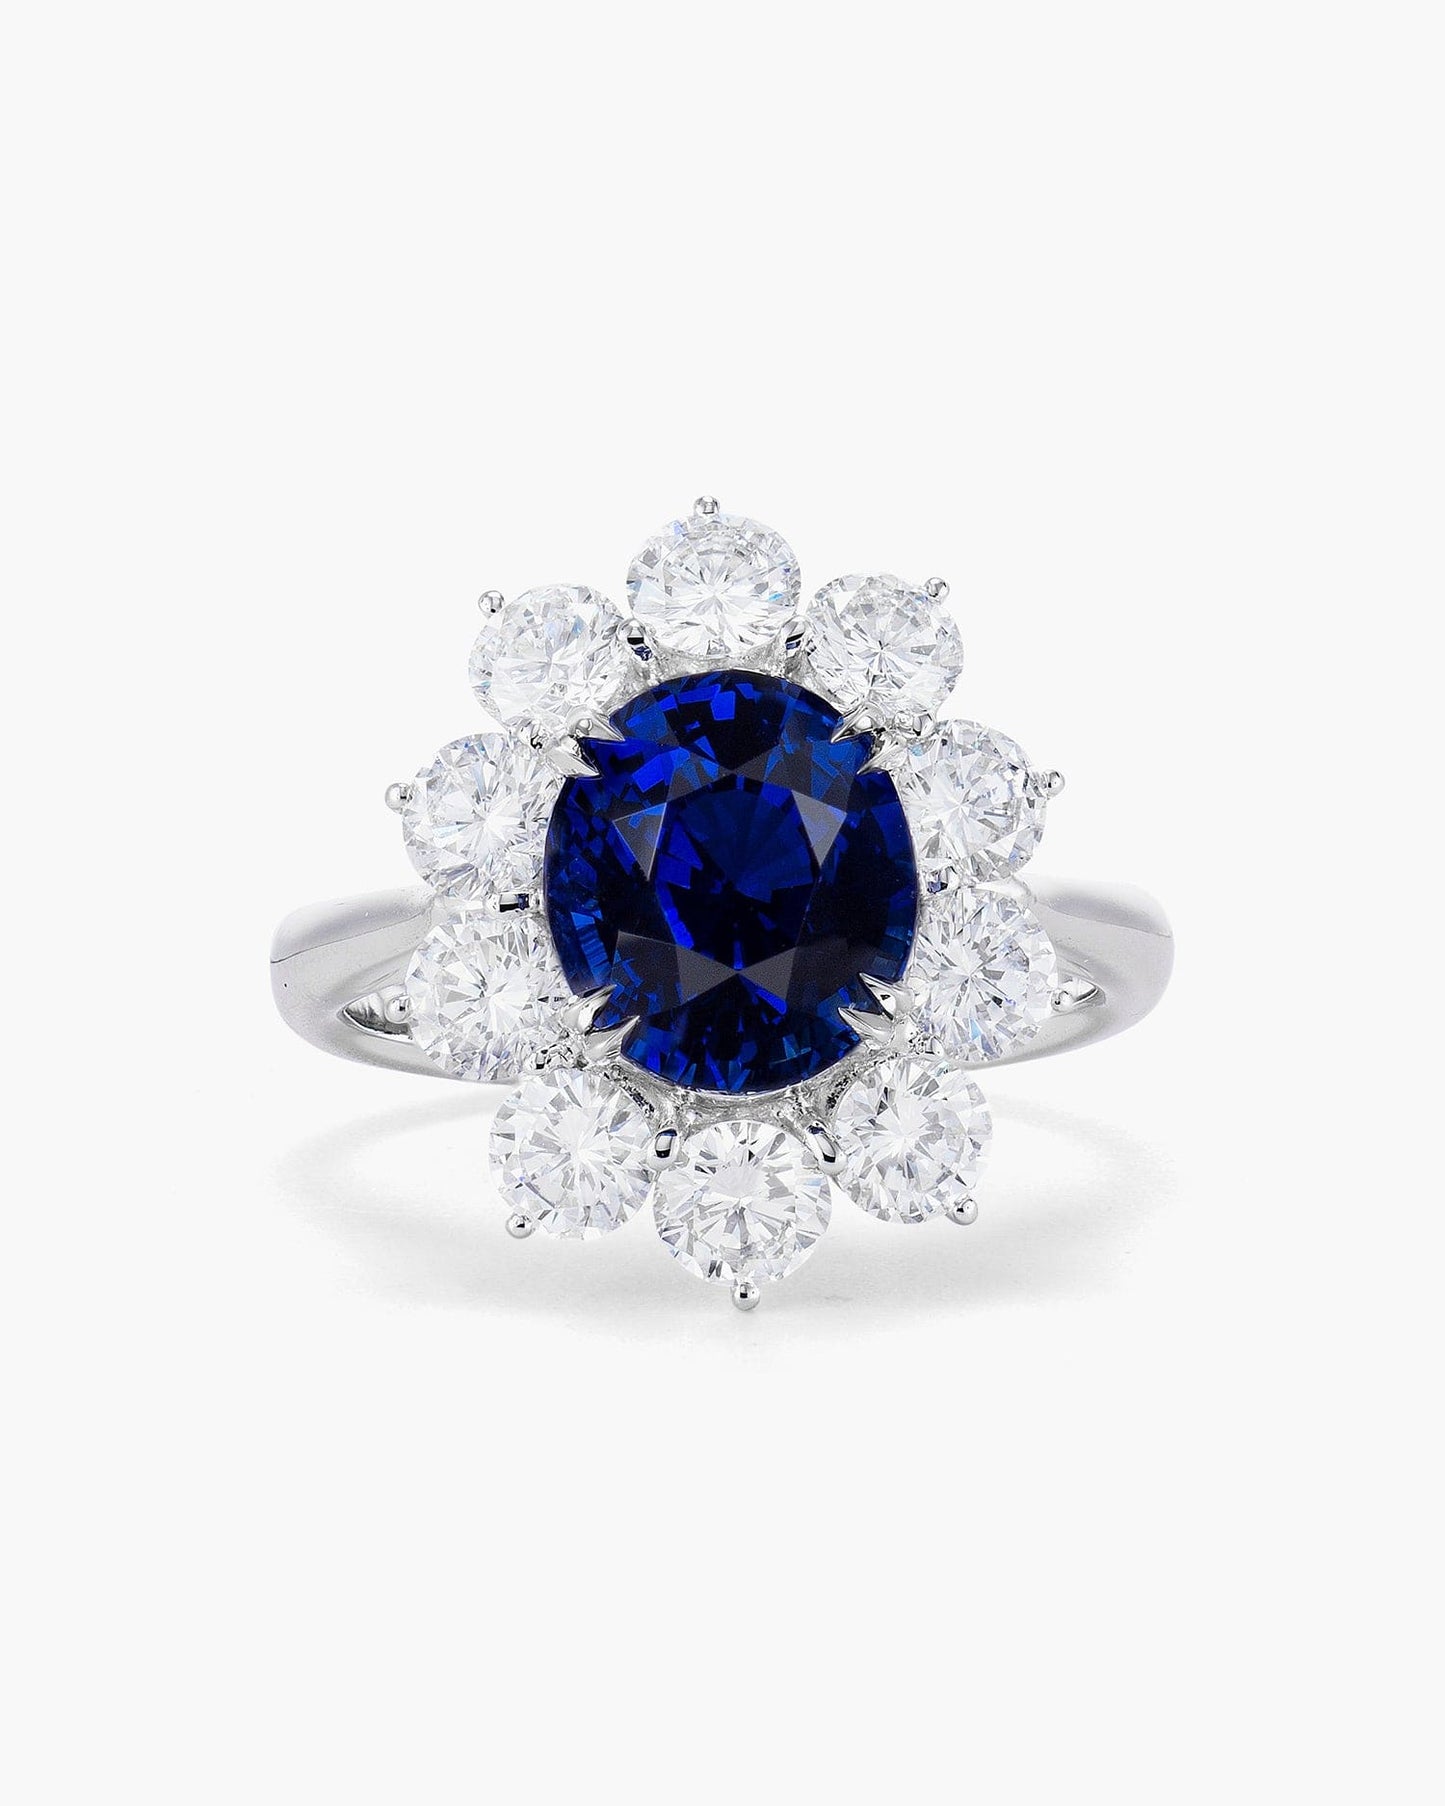 4.01 carat Oval Shape Sapphire and Diamond Ring